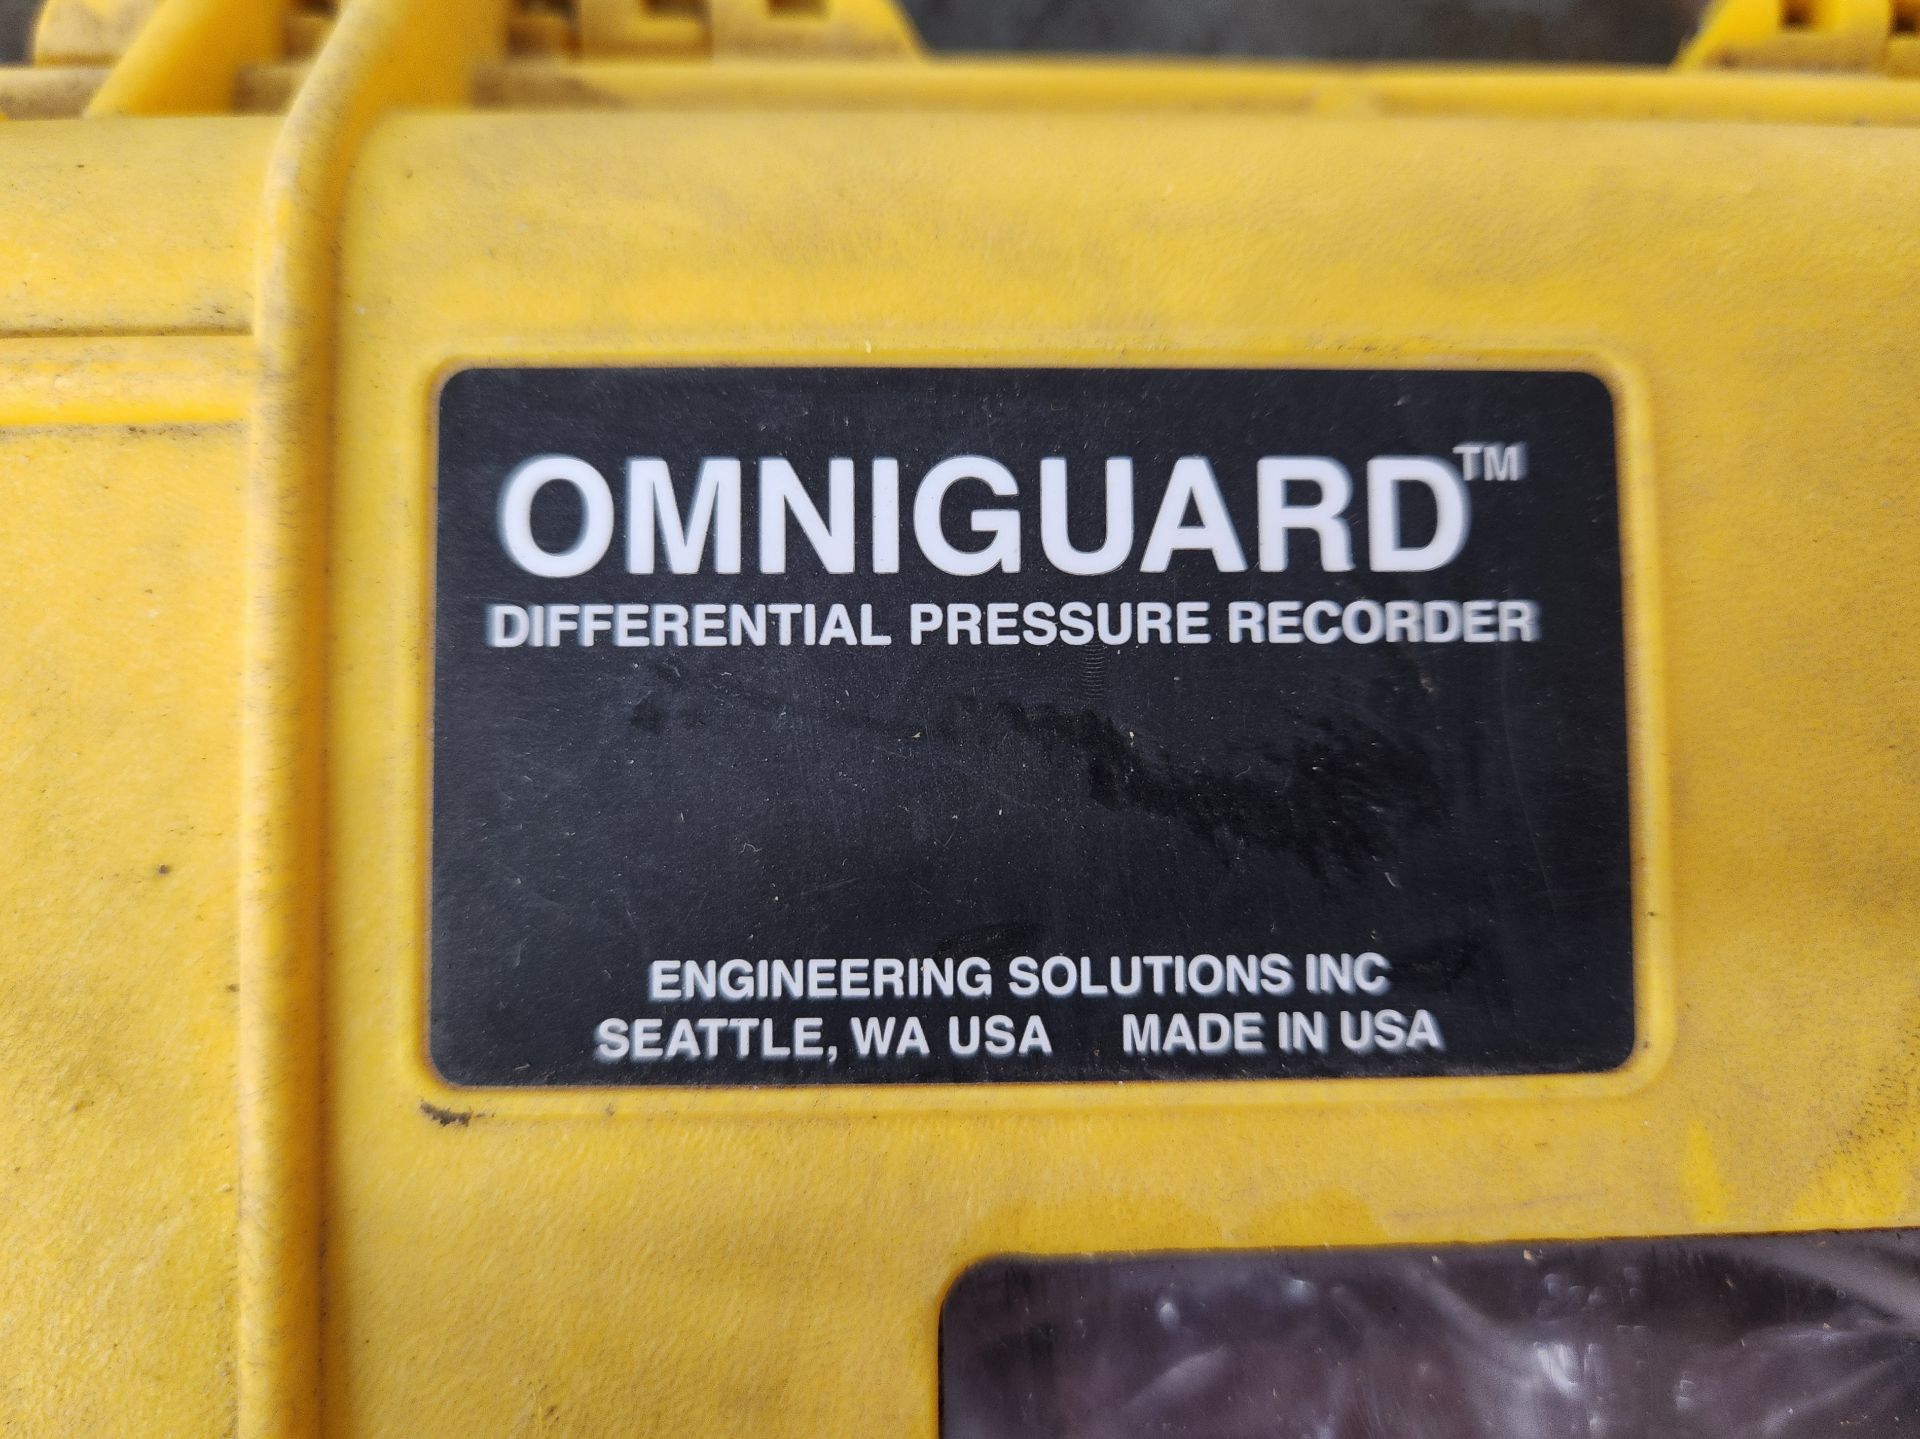 Omniguard Differential Pressure Recorder in Case - Image 4 of 4